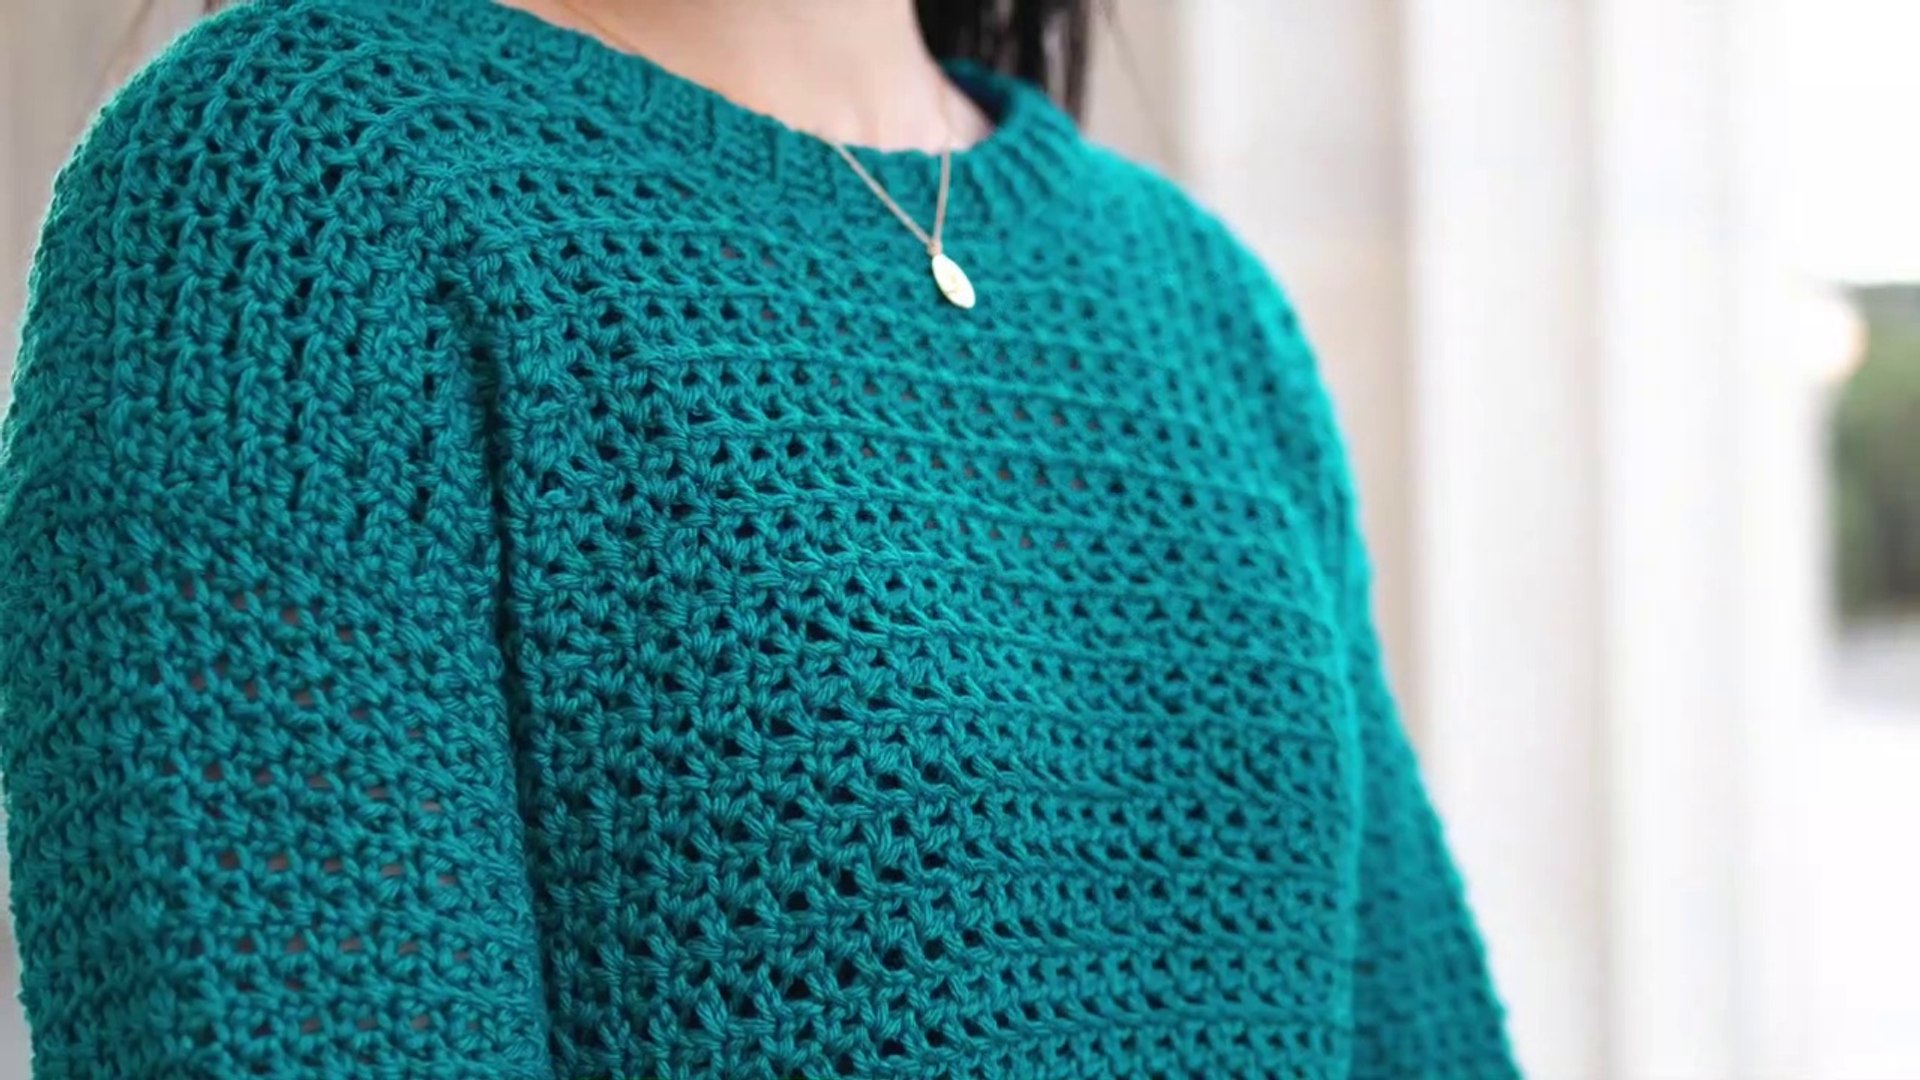 How to Crochet a Sweater Tutorial | بلوفر كروشيه سهل جدا للمبتدئين - فيديو  Dailymotion